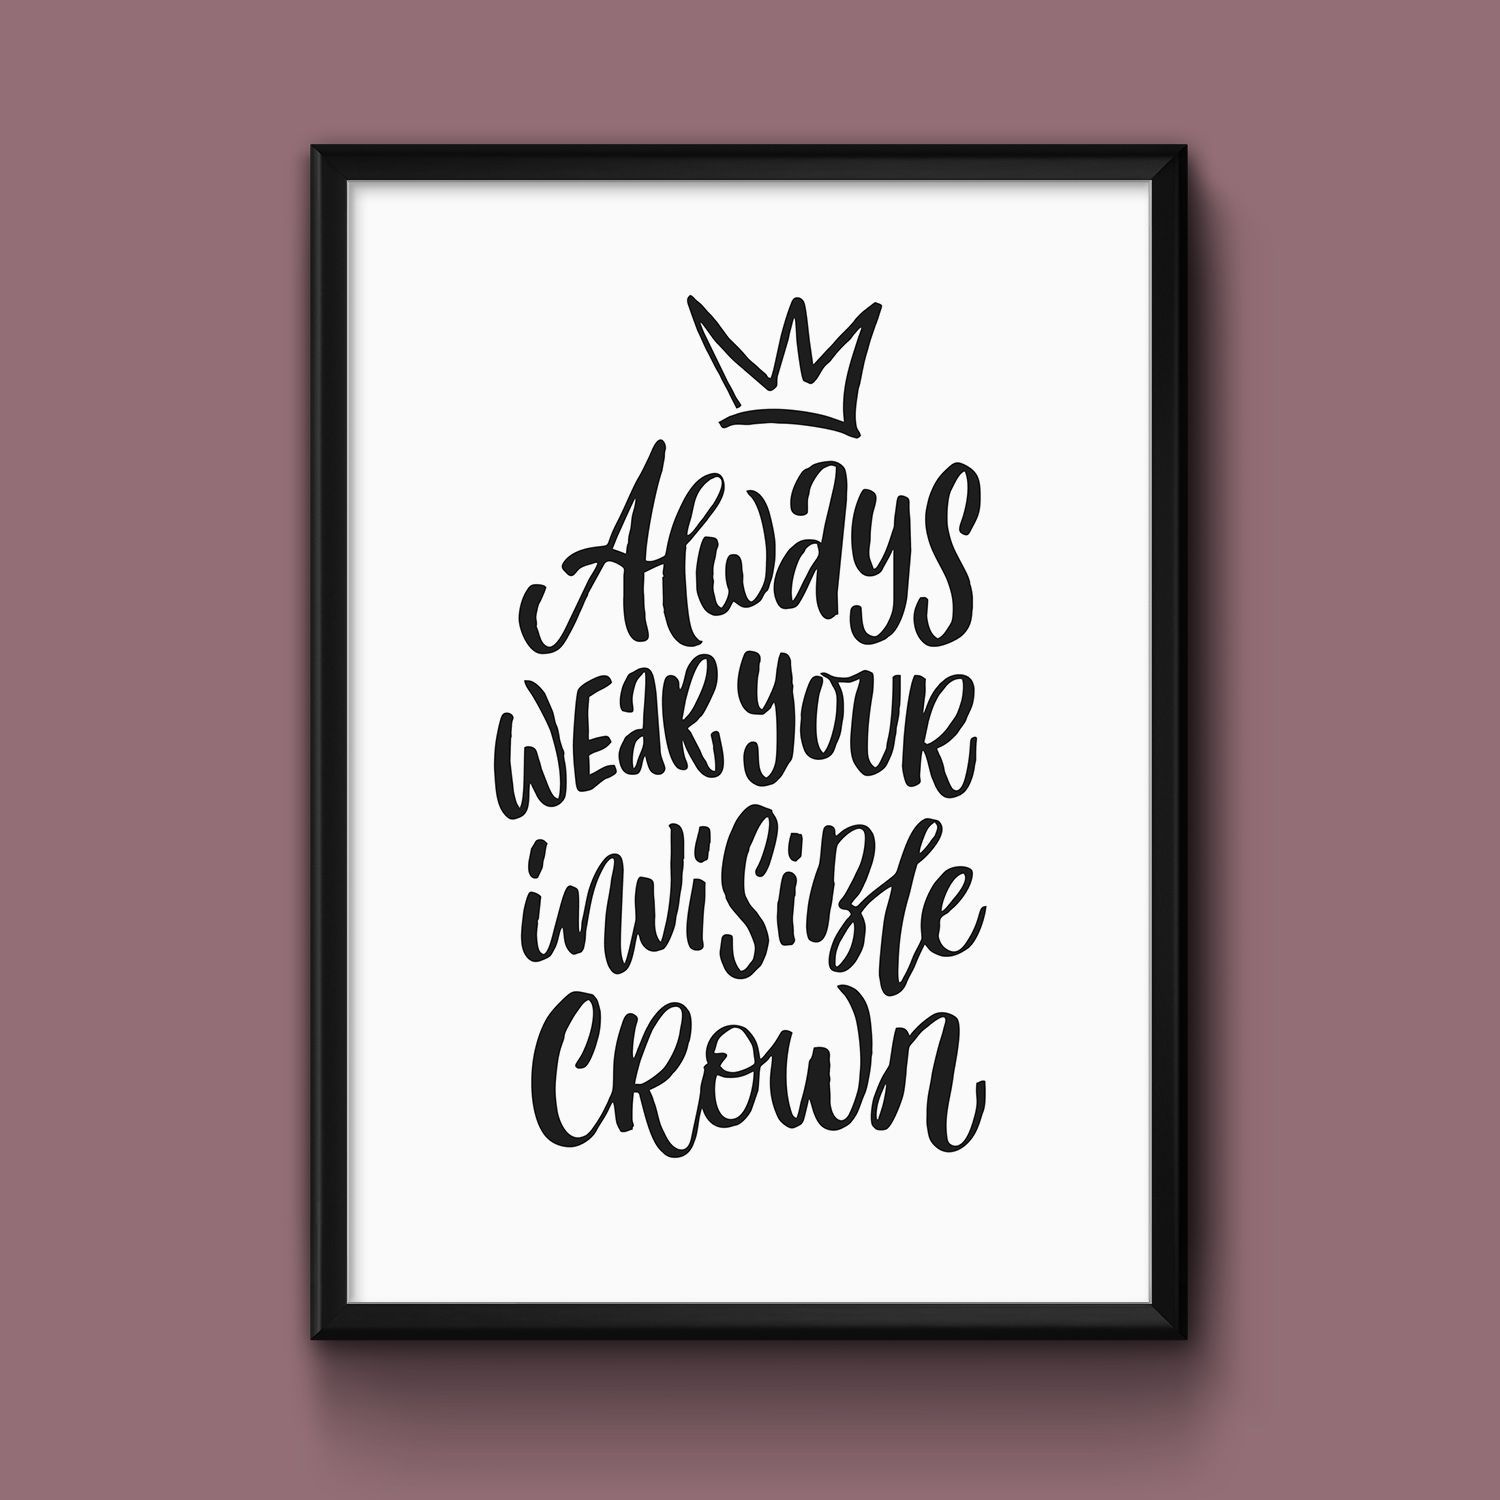 Постер "Always wear your crown"